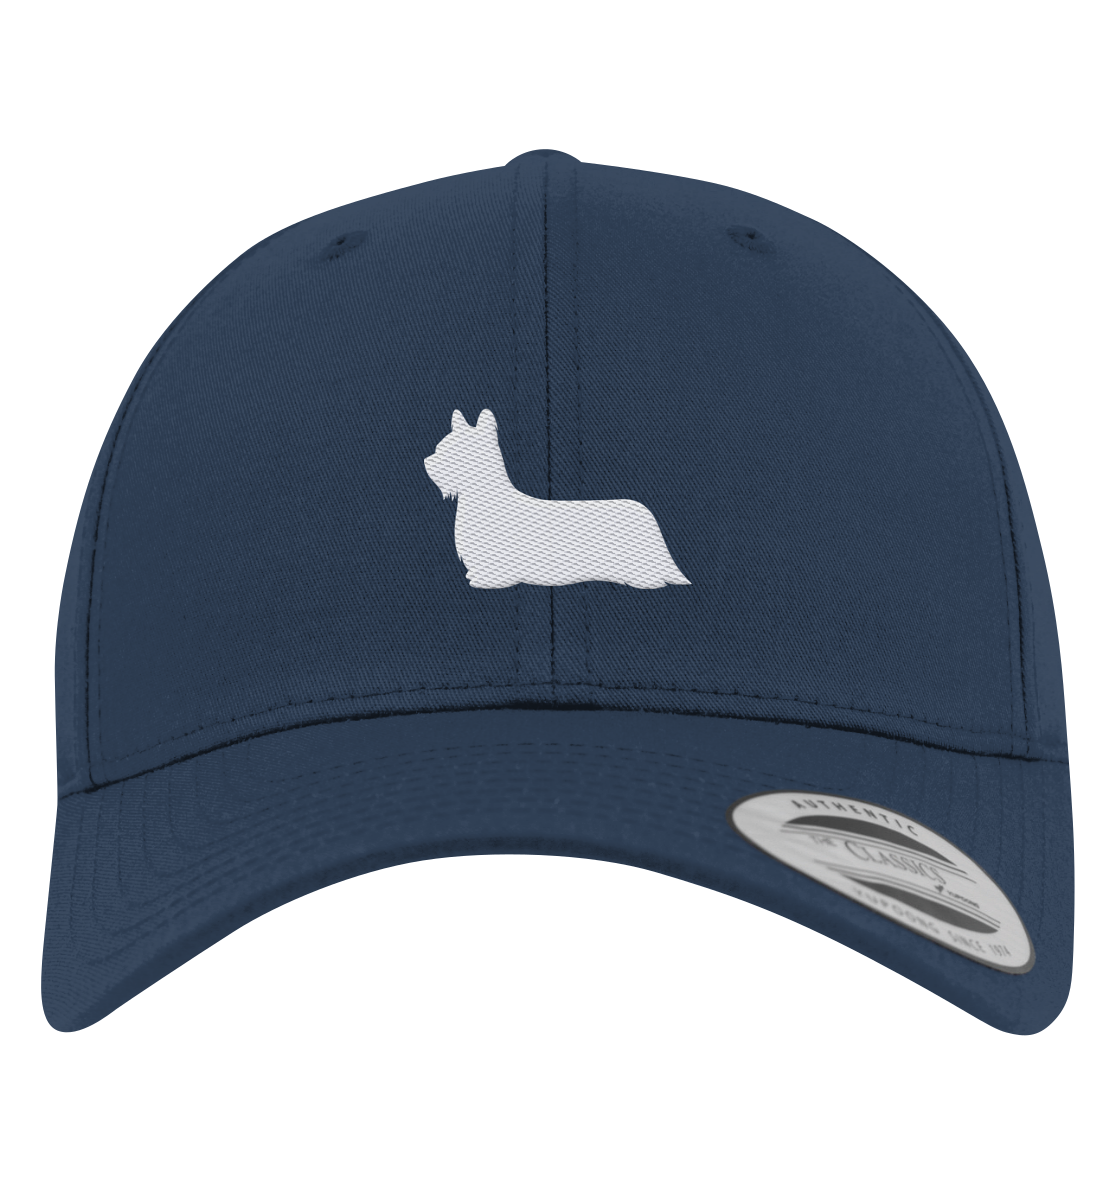 Skye Terrier-Silhouette - Premium Baseball Cap